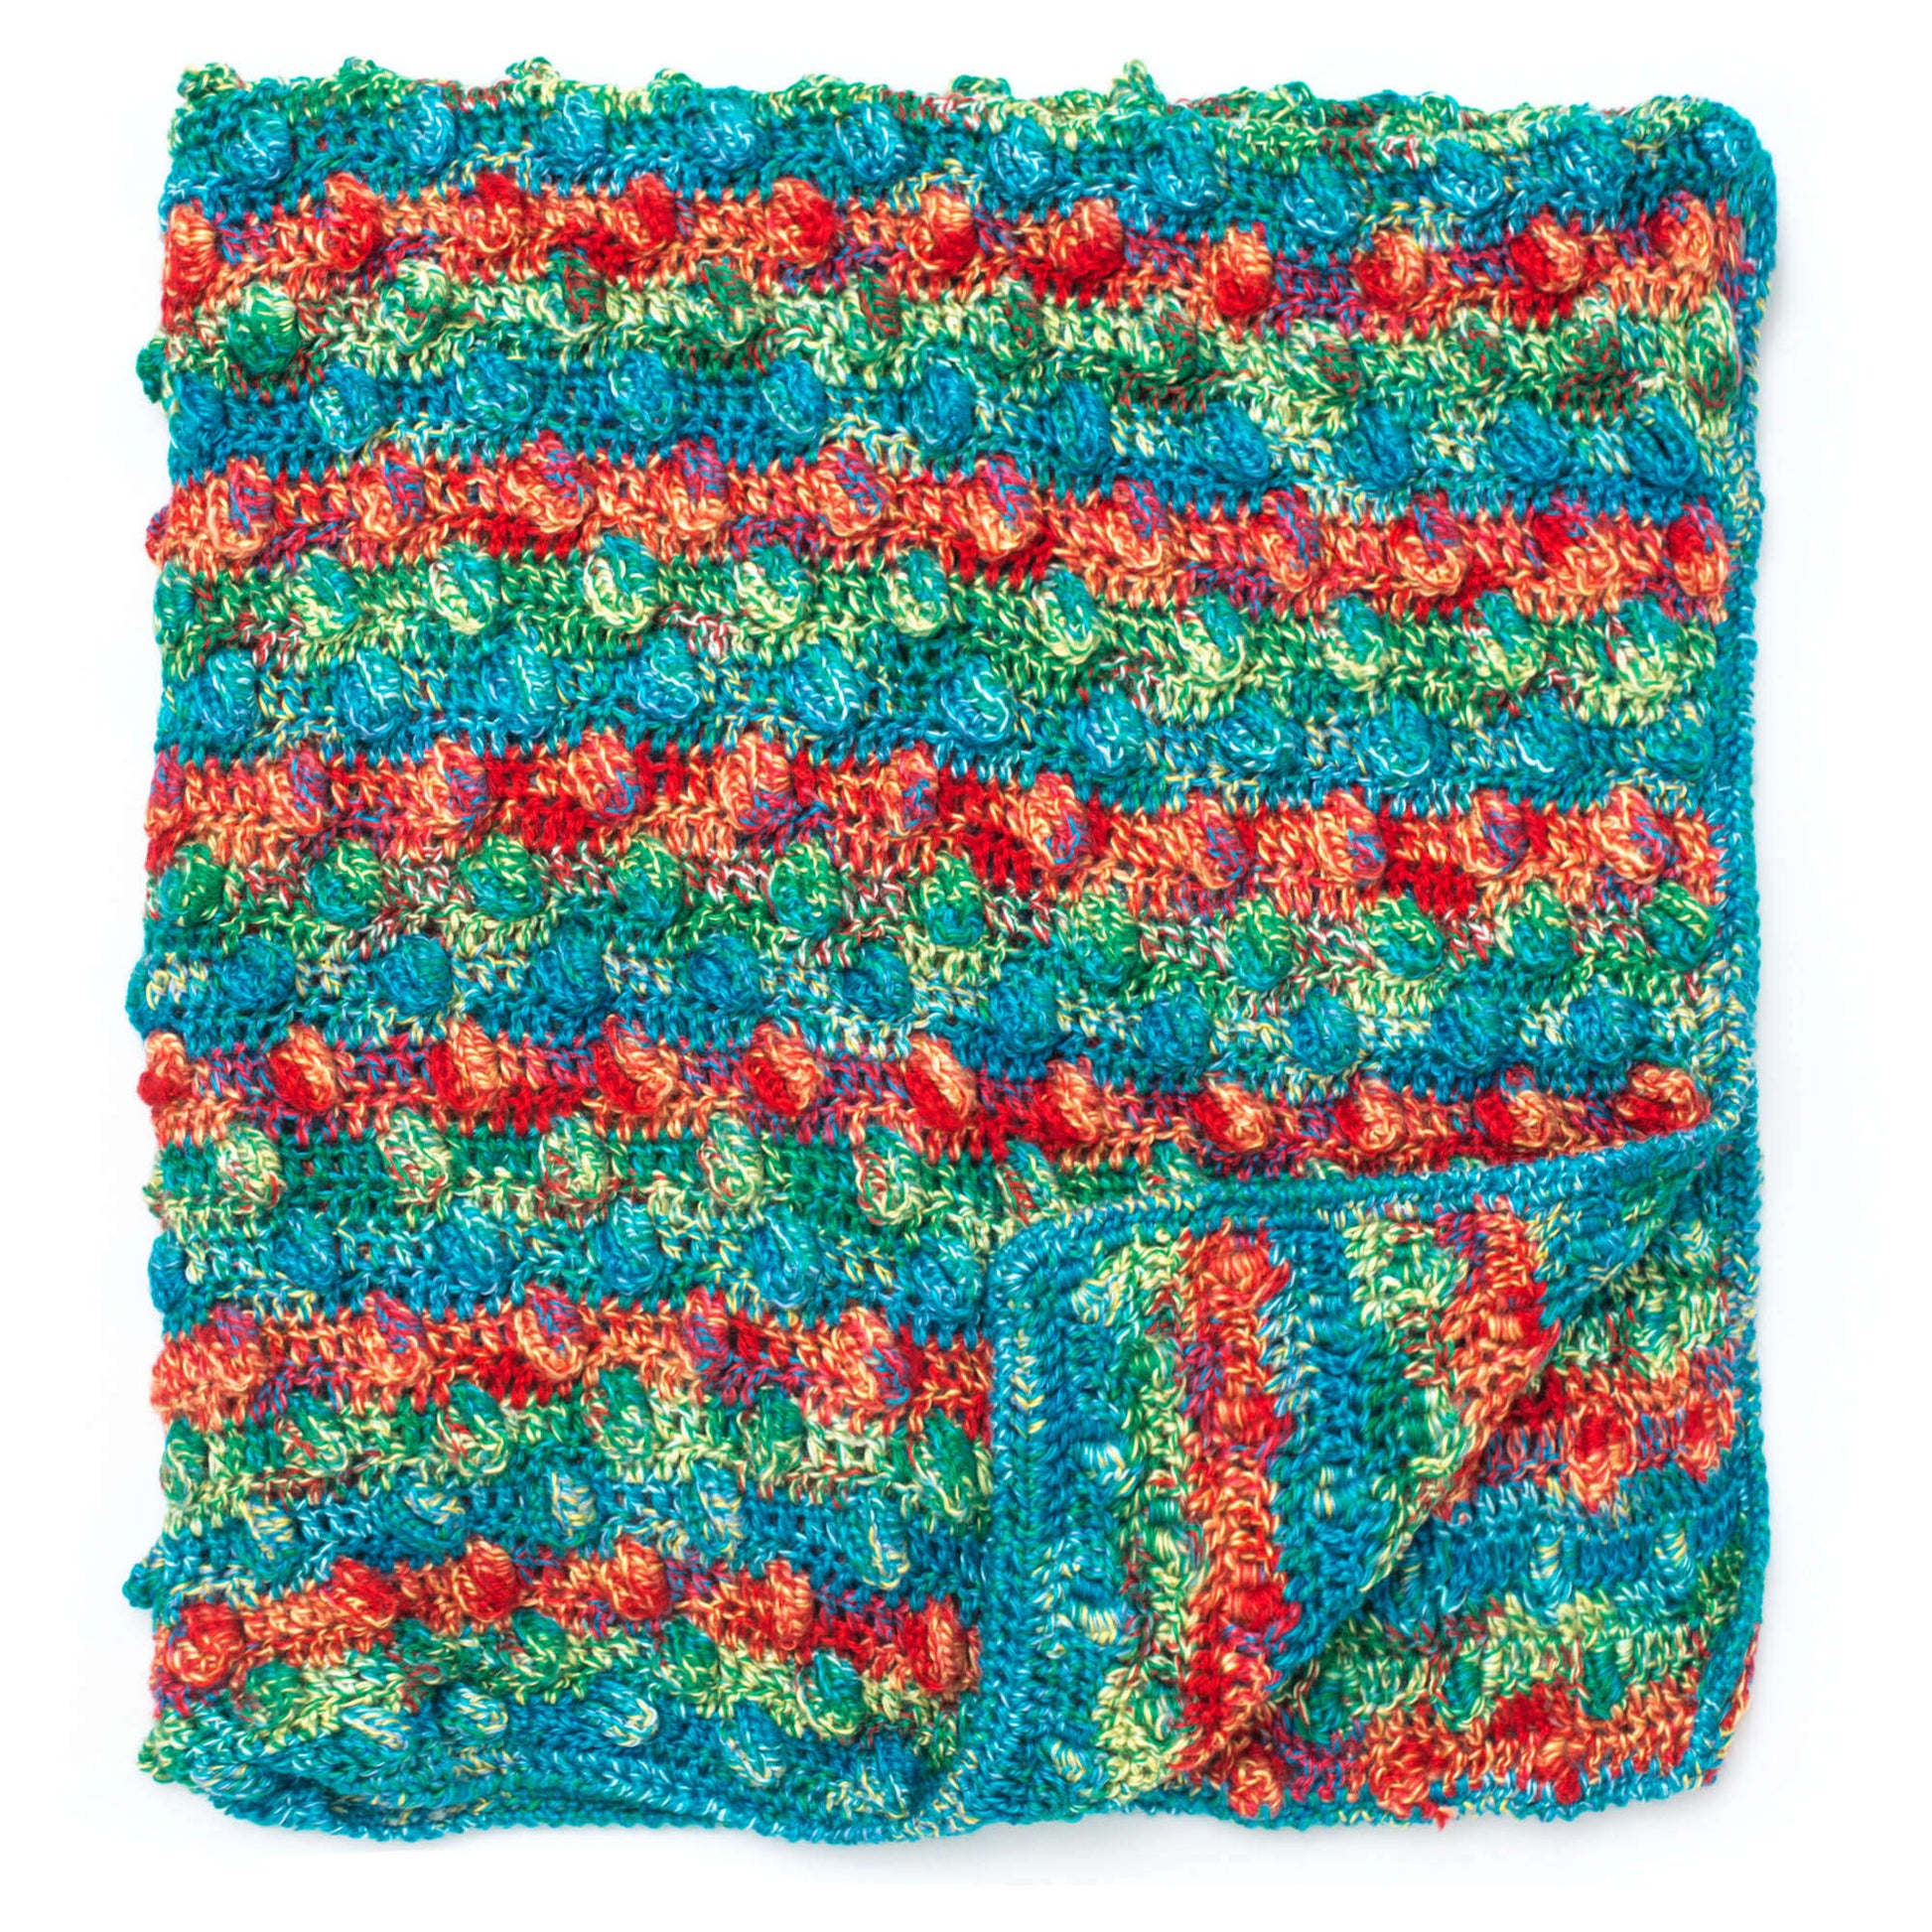 Bernat Color Pops Crochet Blanket Crochet Blanket made in Bernat Softee Baby yarn